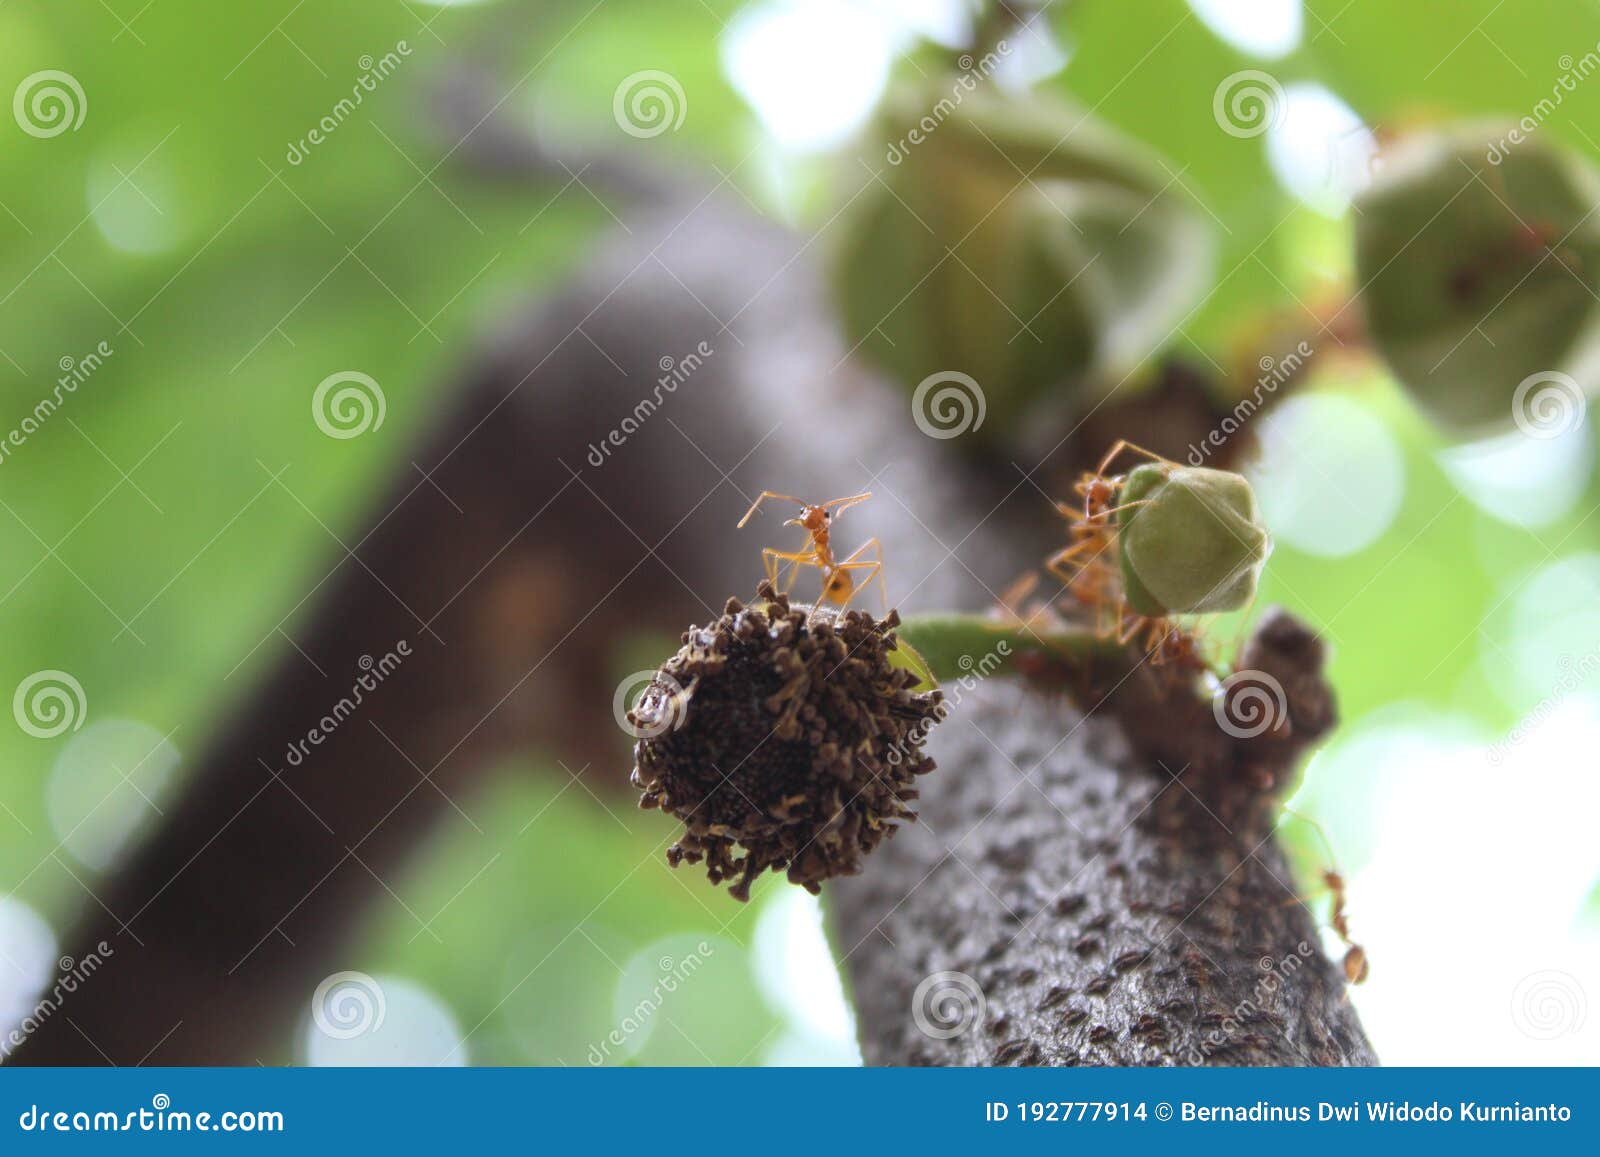 ants and sugar apple flower or srikaya